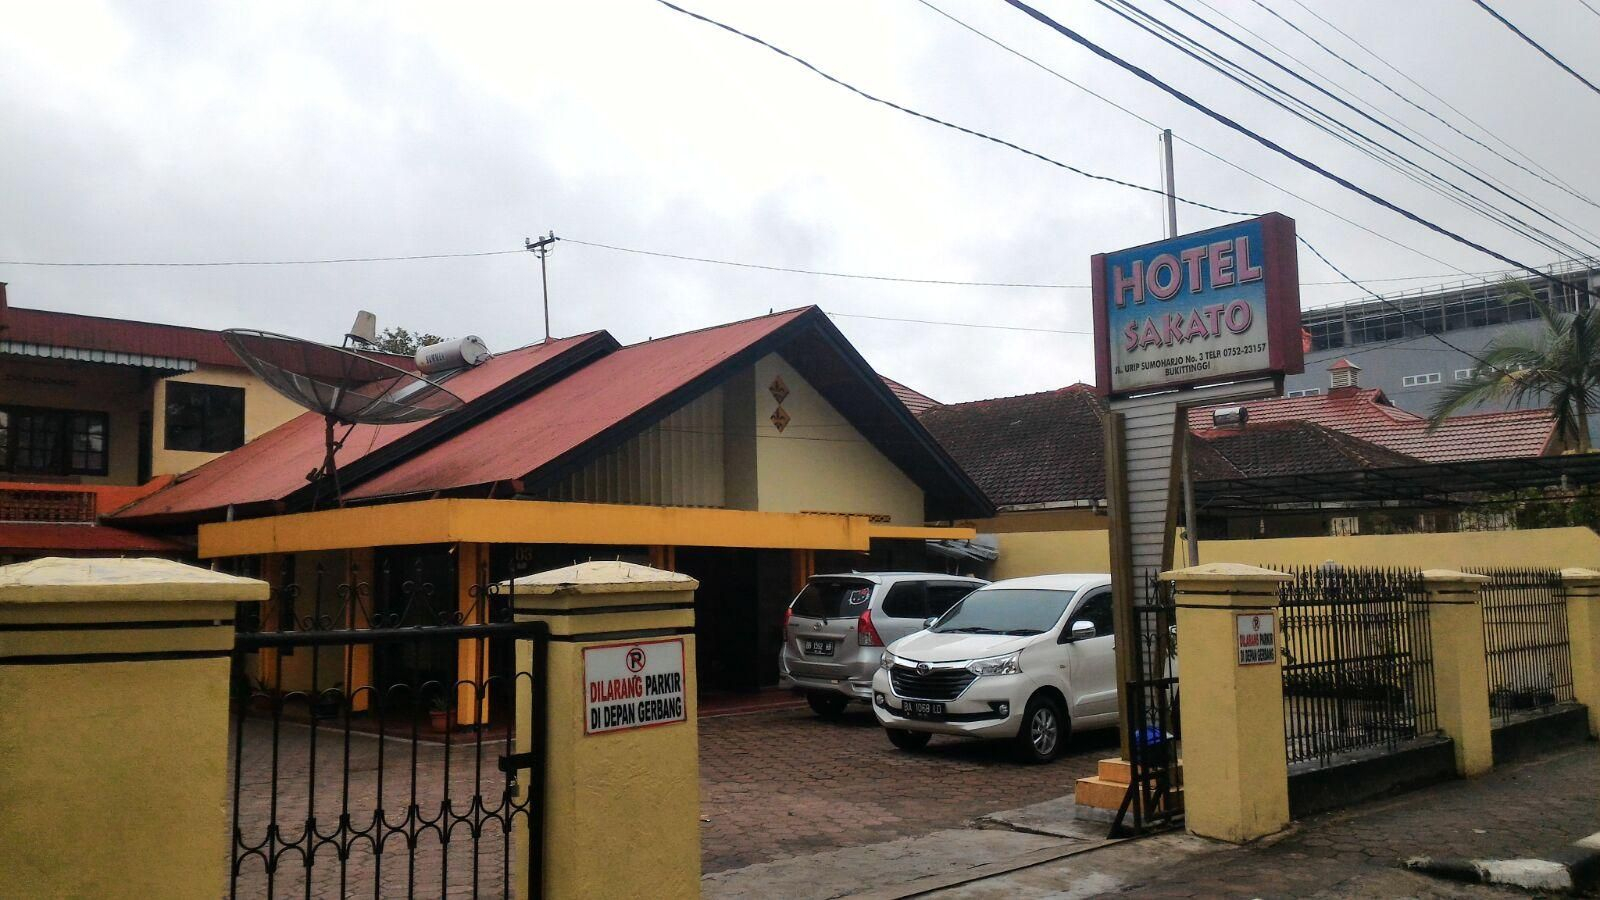 Exterior & Views 1, Hotel Sakato Bukittinggi, Bukittinggi